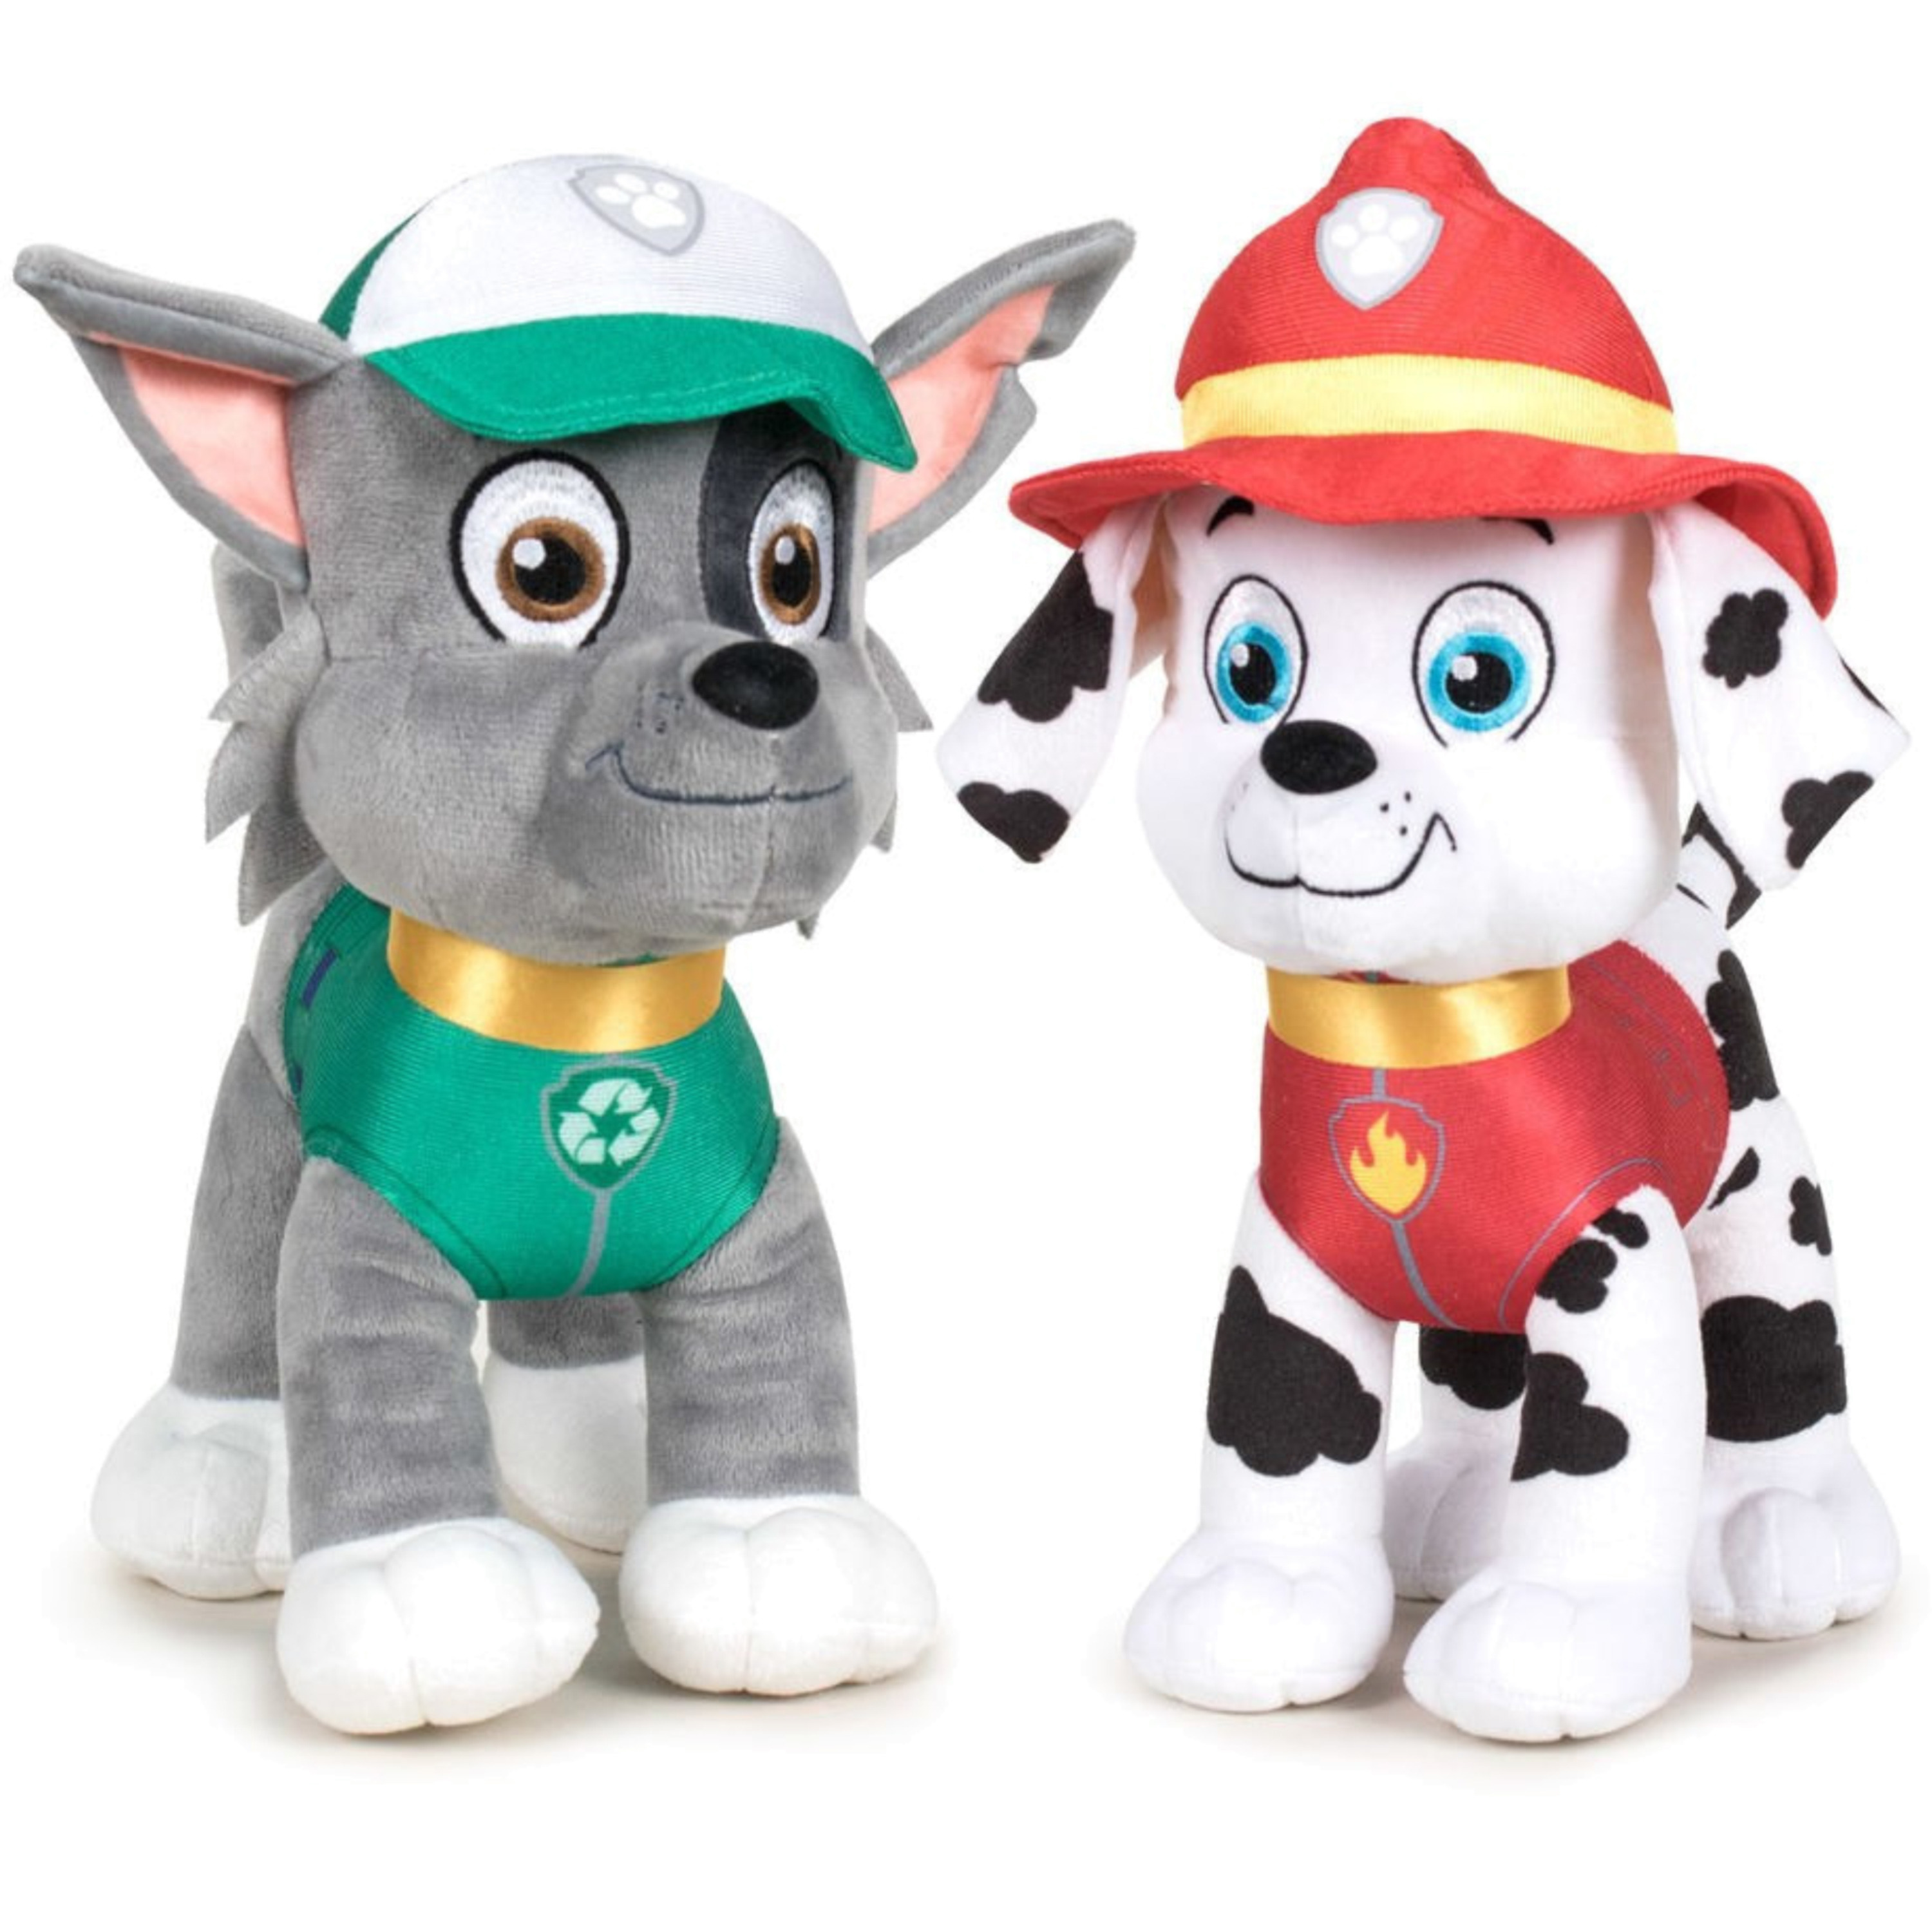 Paw Patrol figuren speelgoed knuffels set van 2x karakters Marshall en Rocky 19 cm -